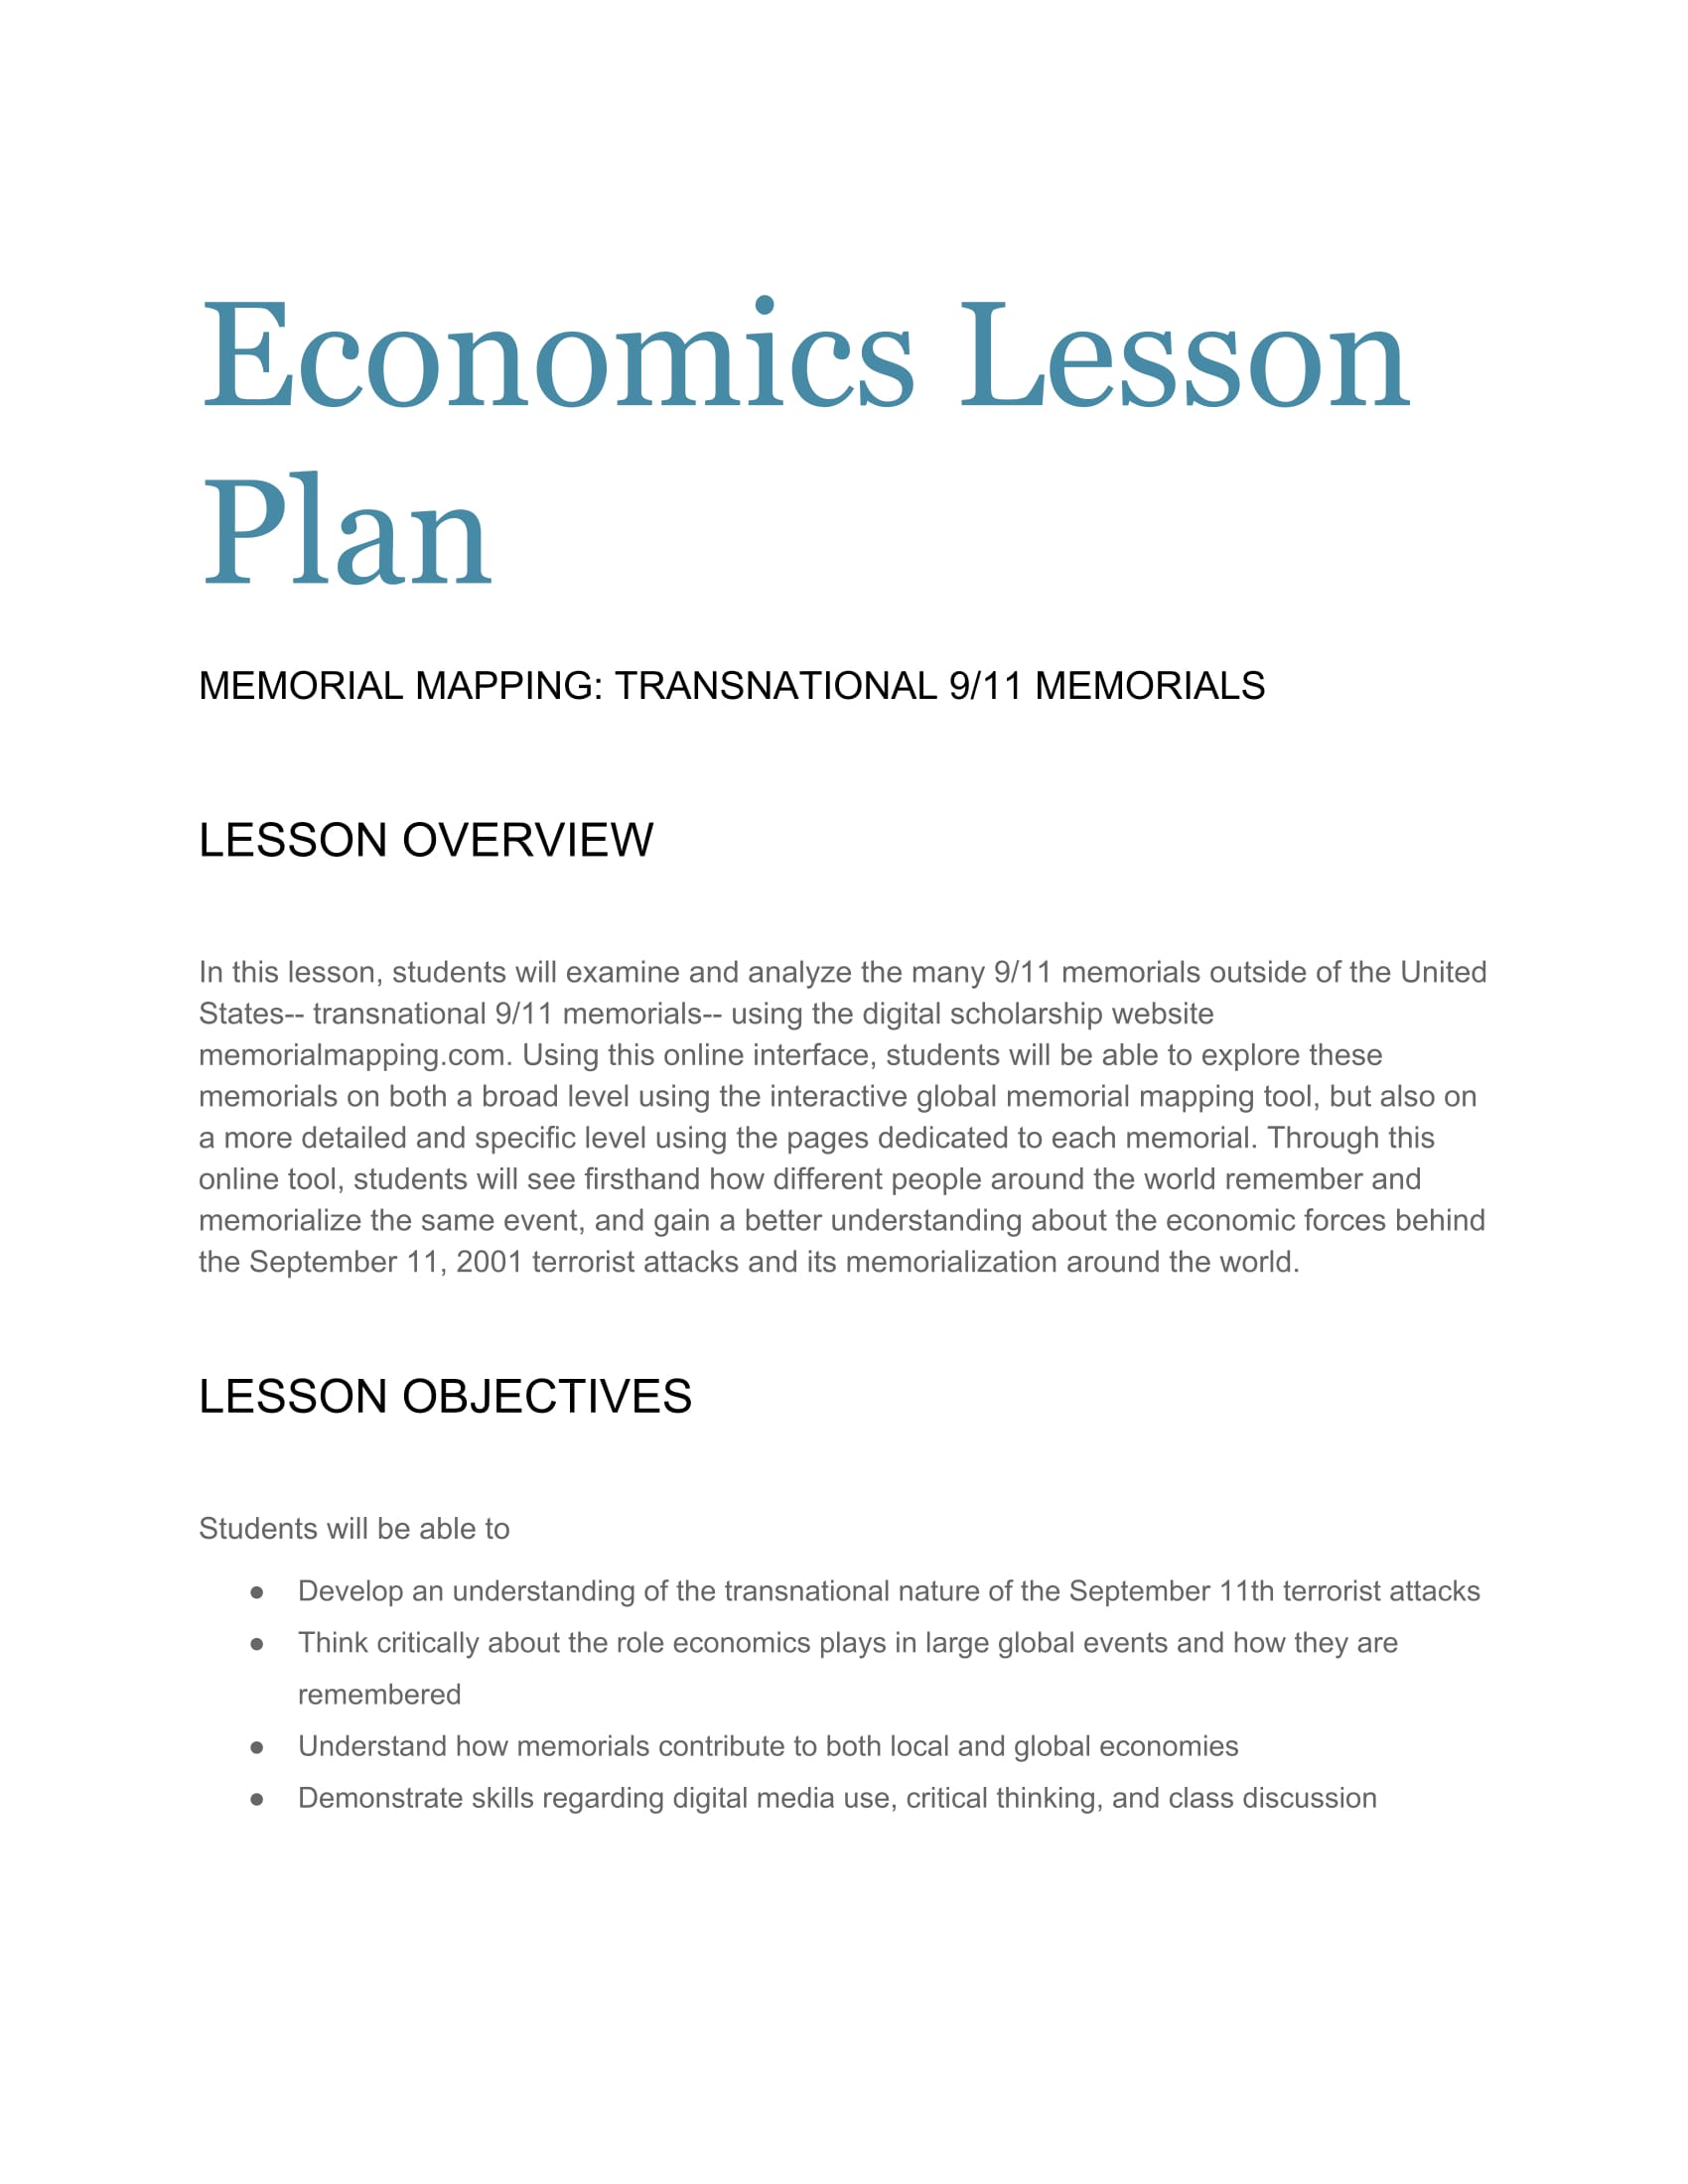 Economics Lesson Plan (1)-1.jpg